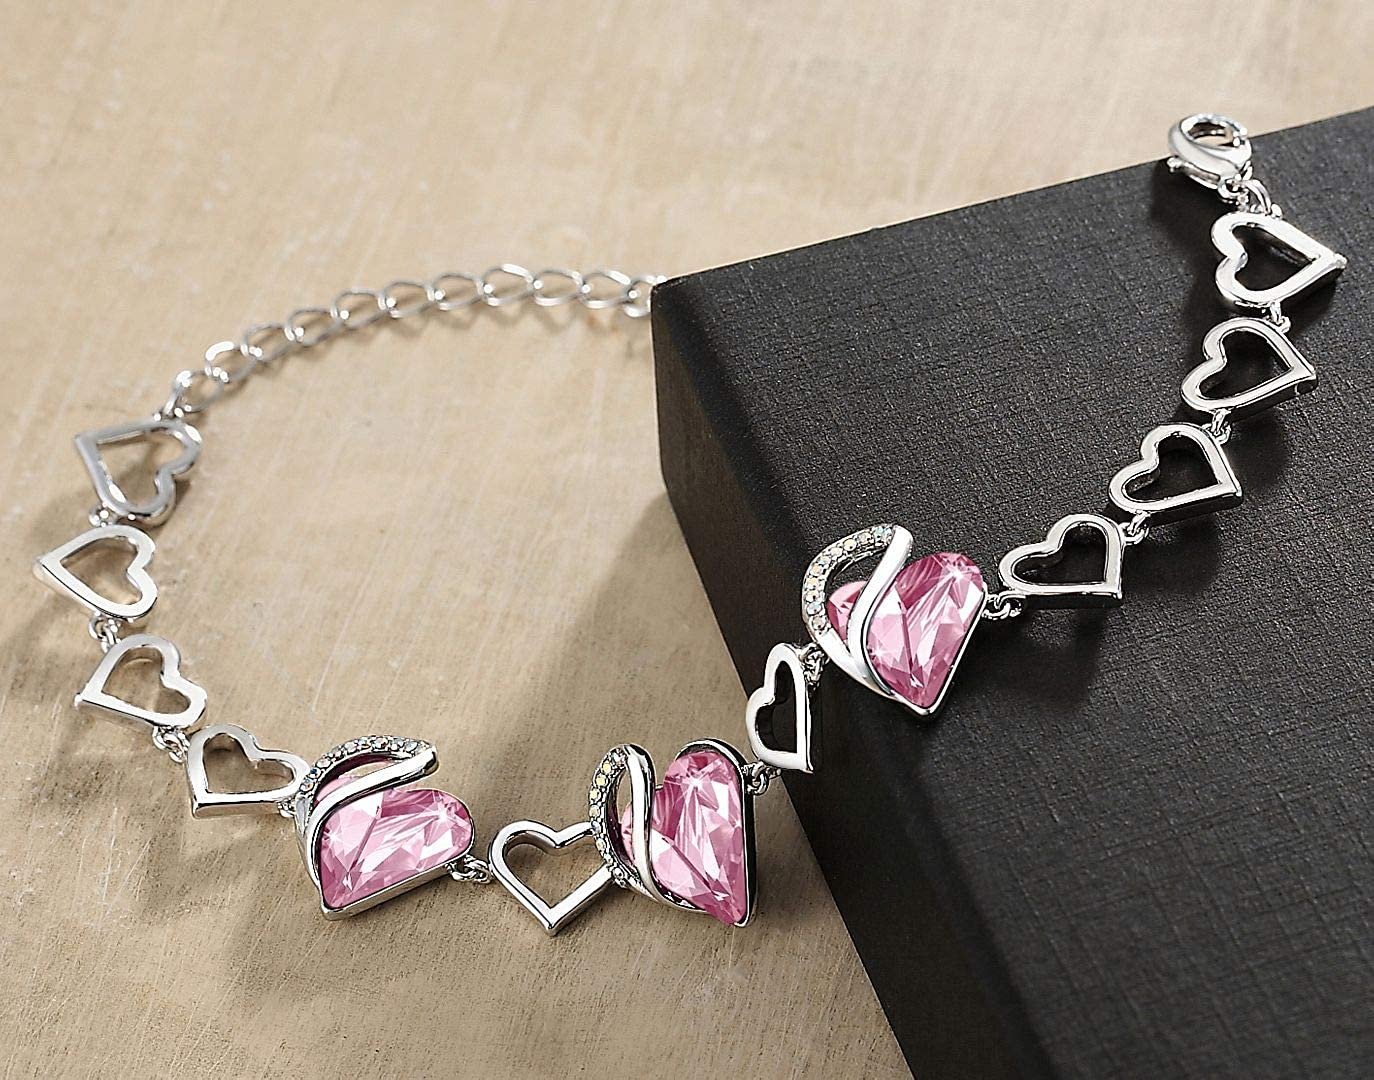 Leafael – Birthstone Crystal, Wom Love Link Infinity Leafael Jewelry Heart with Bracelet